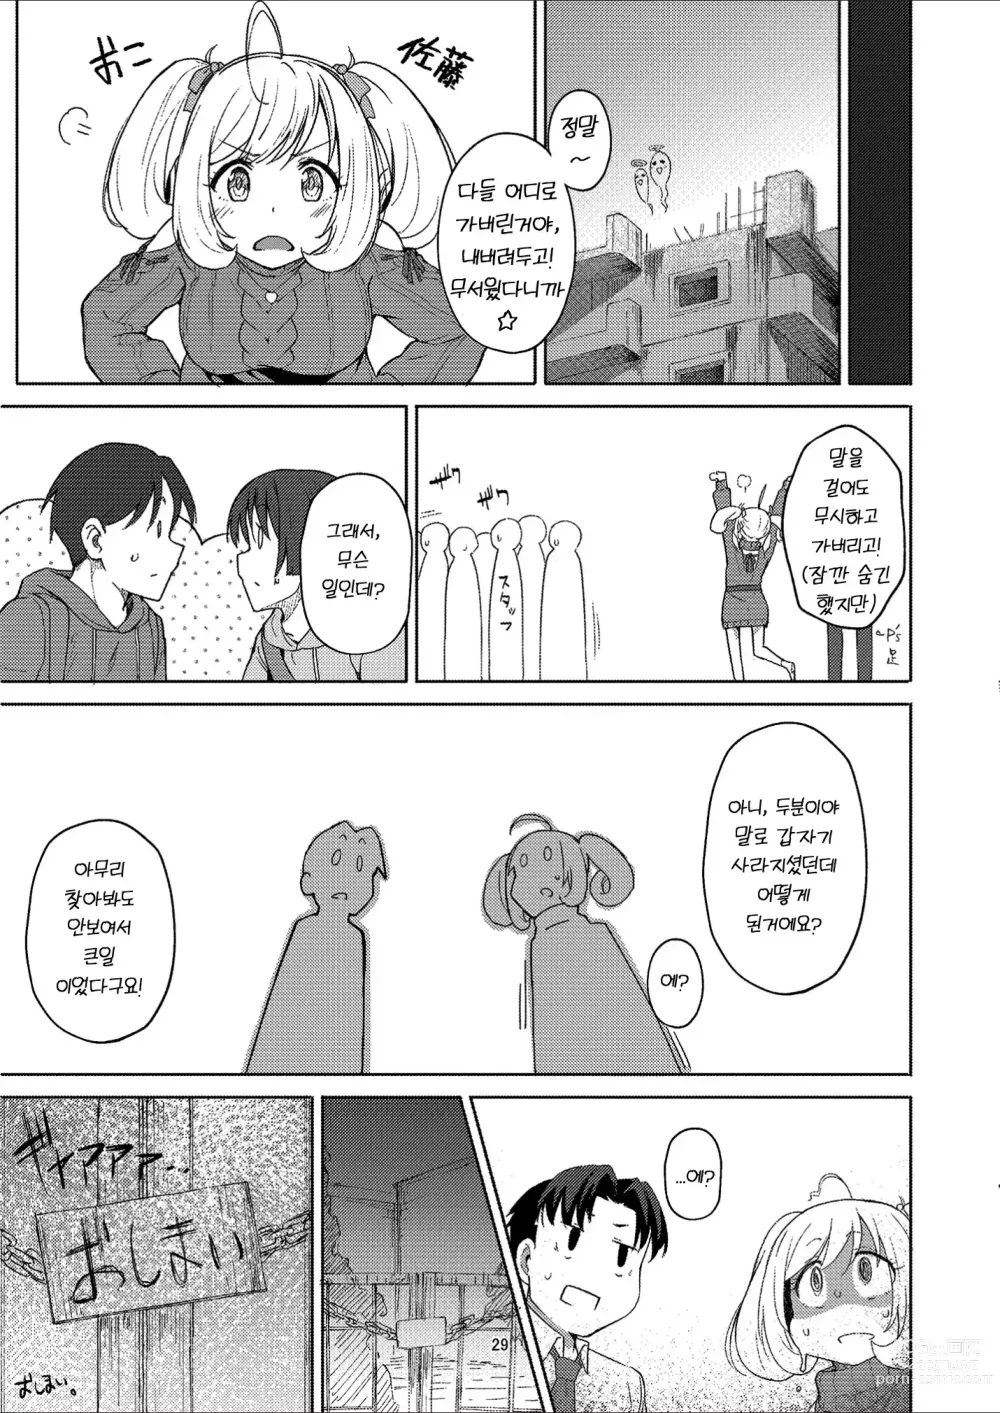 Page 28 of doujinshi 하트하고 호러한 로케이션